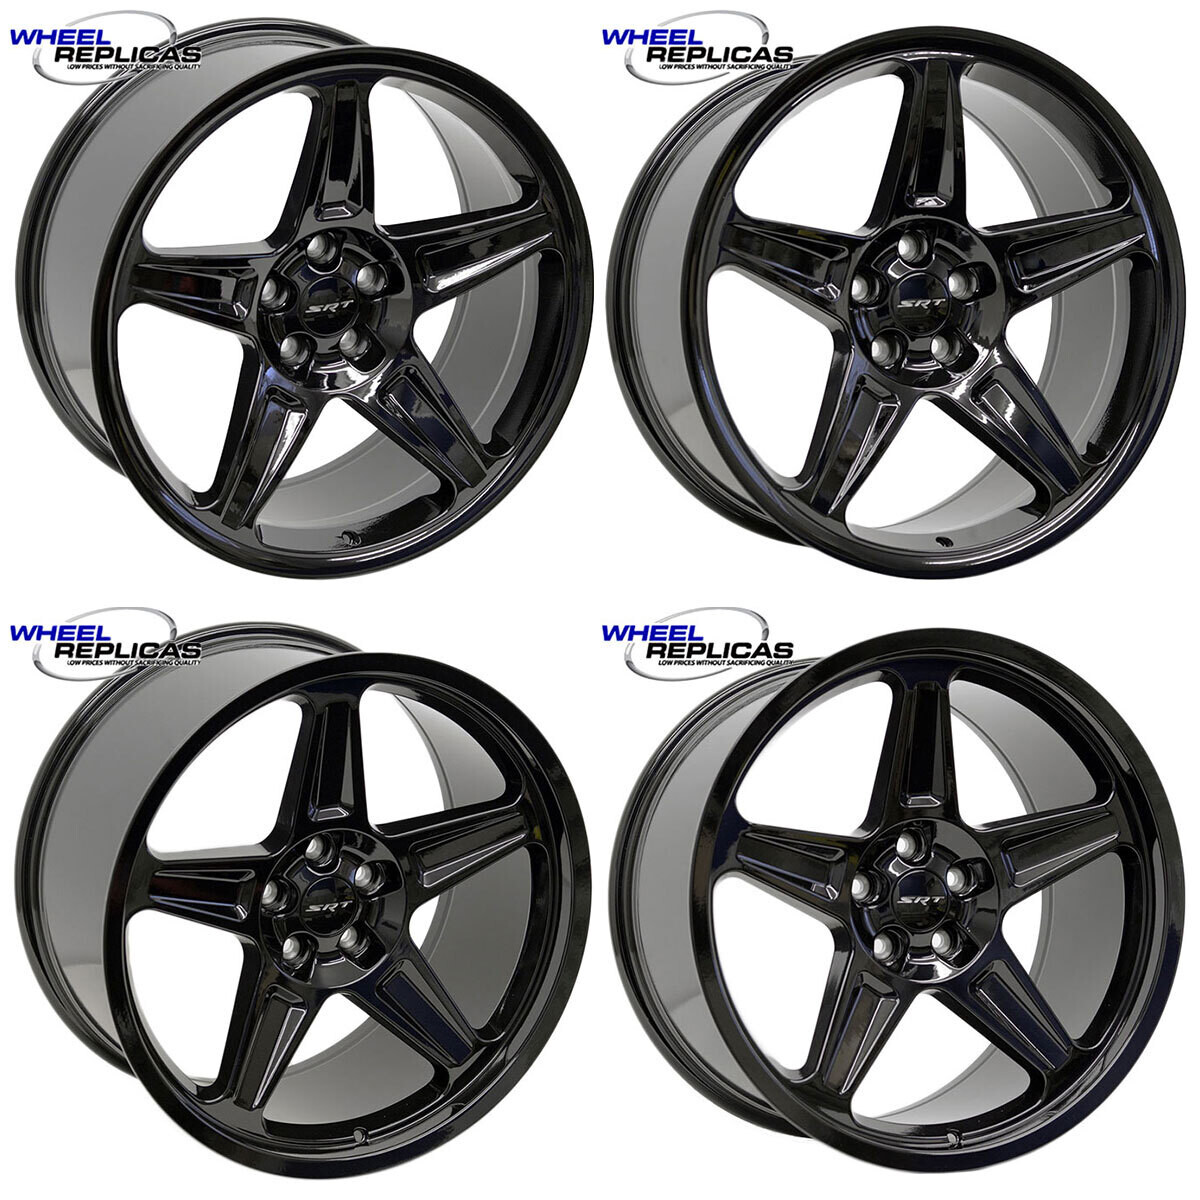 20X9.5 & 20x10.5 Gloss Black Demon Style Wheels - SET